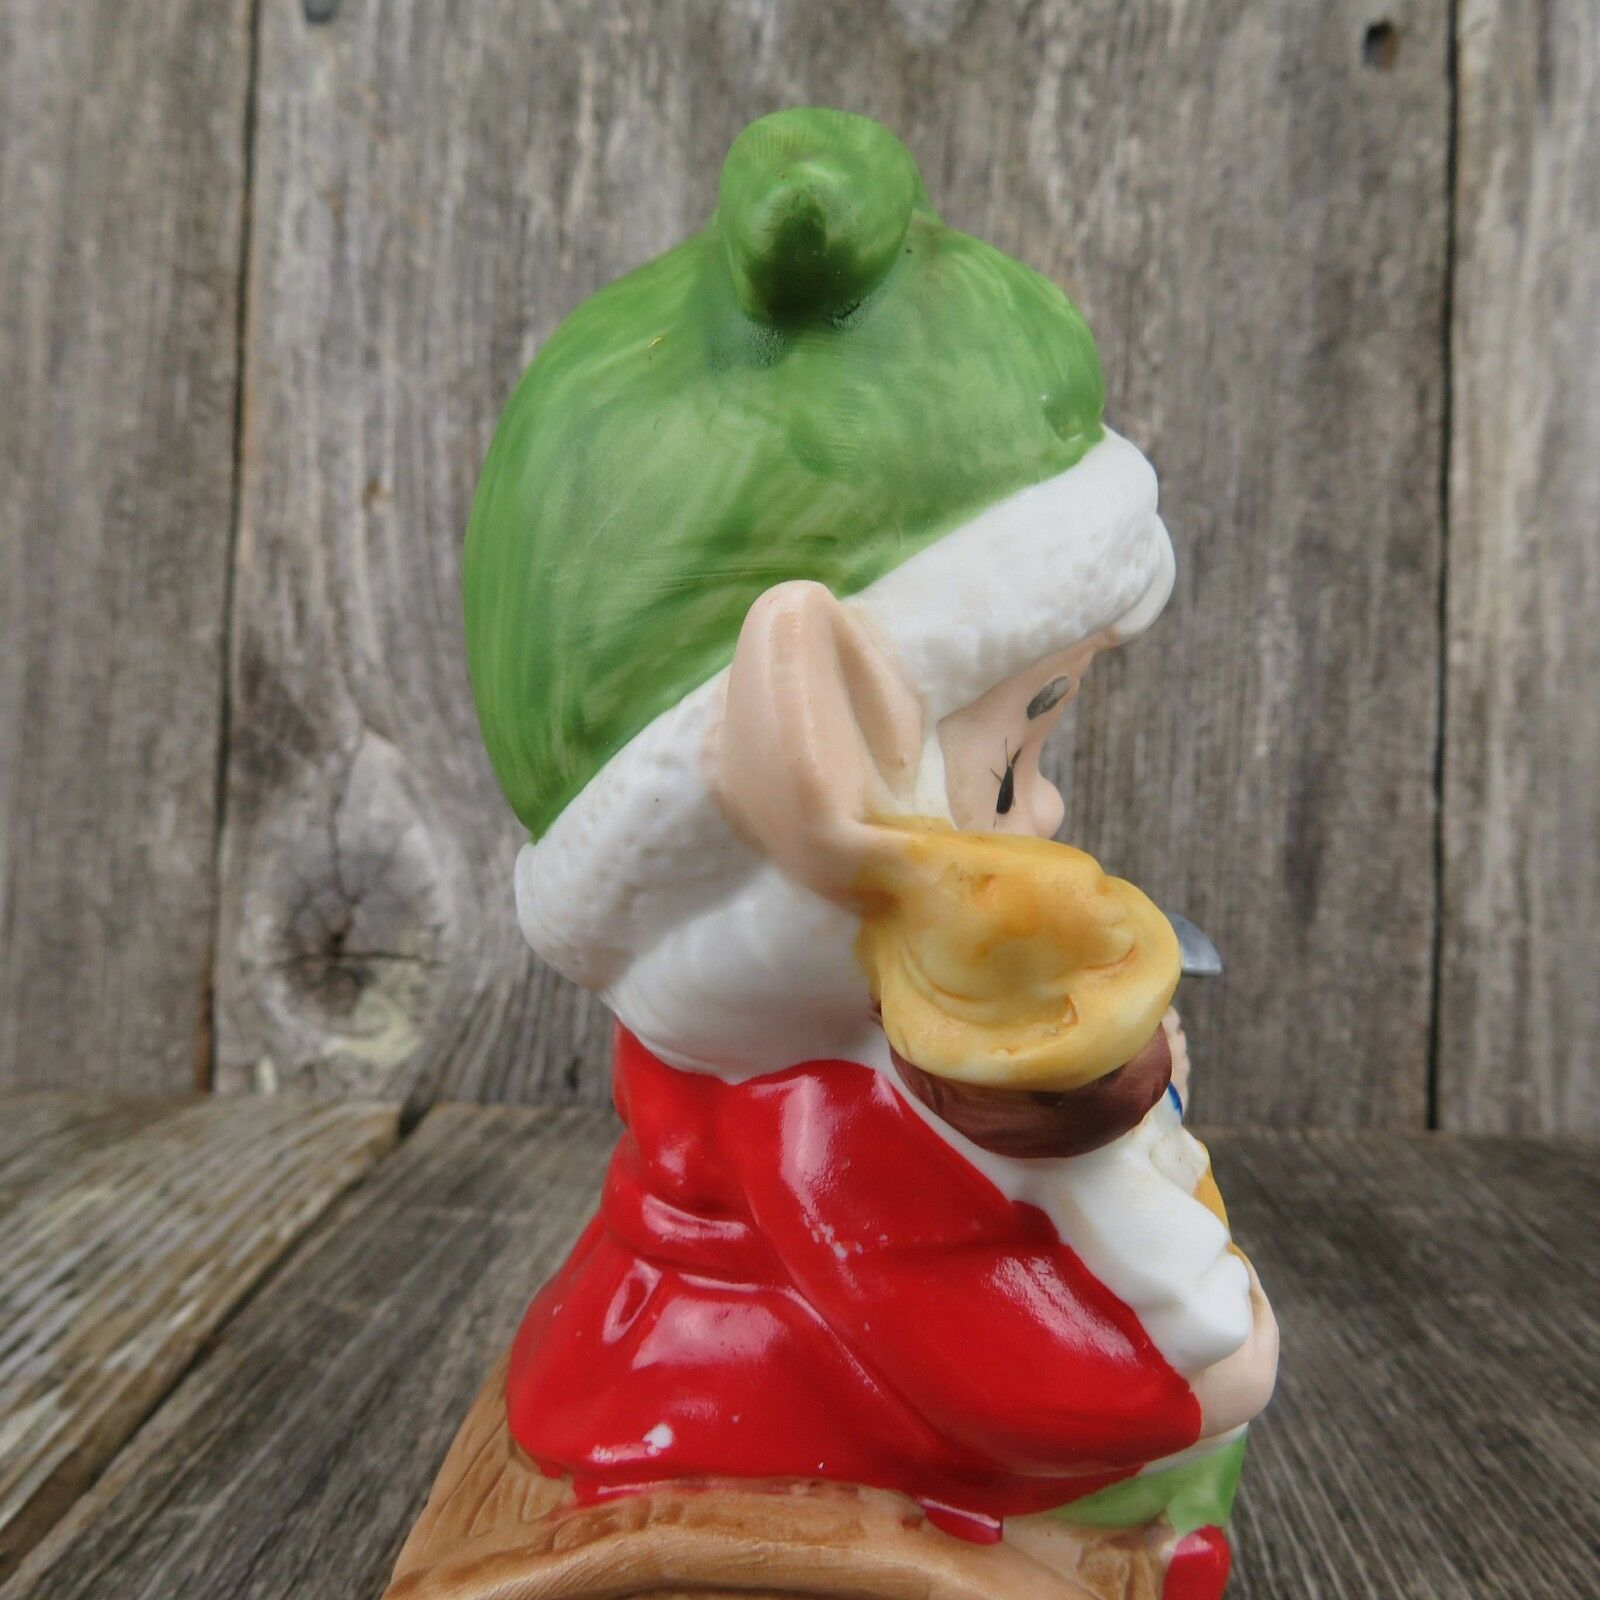 Vintage Toy Maker Elf  Figurine Santa Christmas Doll Ceramic Homco Bisque 5406 - At Grandma's Table